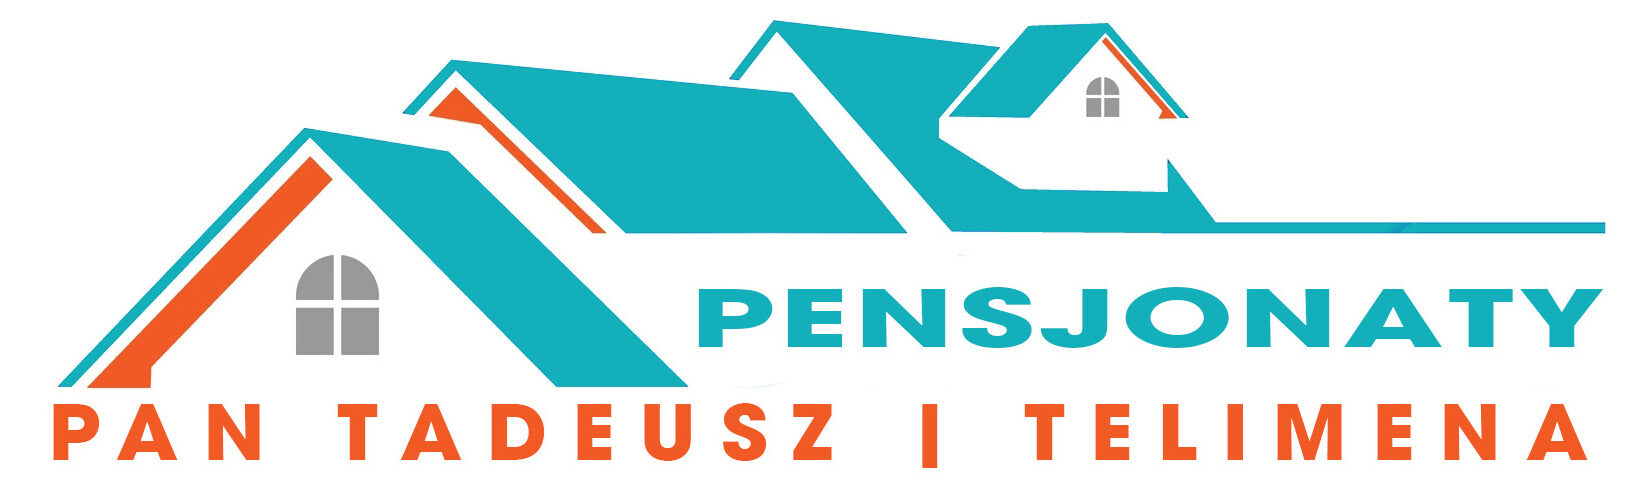 Pensjonat Pan Tadeusz | Pensjonat Telimena | Noclegi w Zwierzyńcu